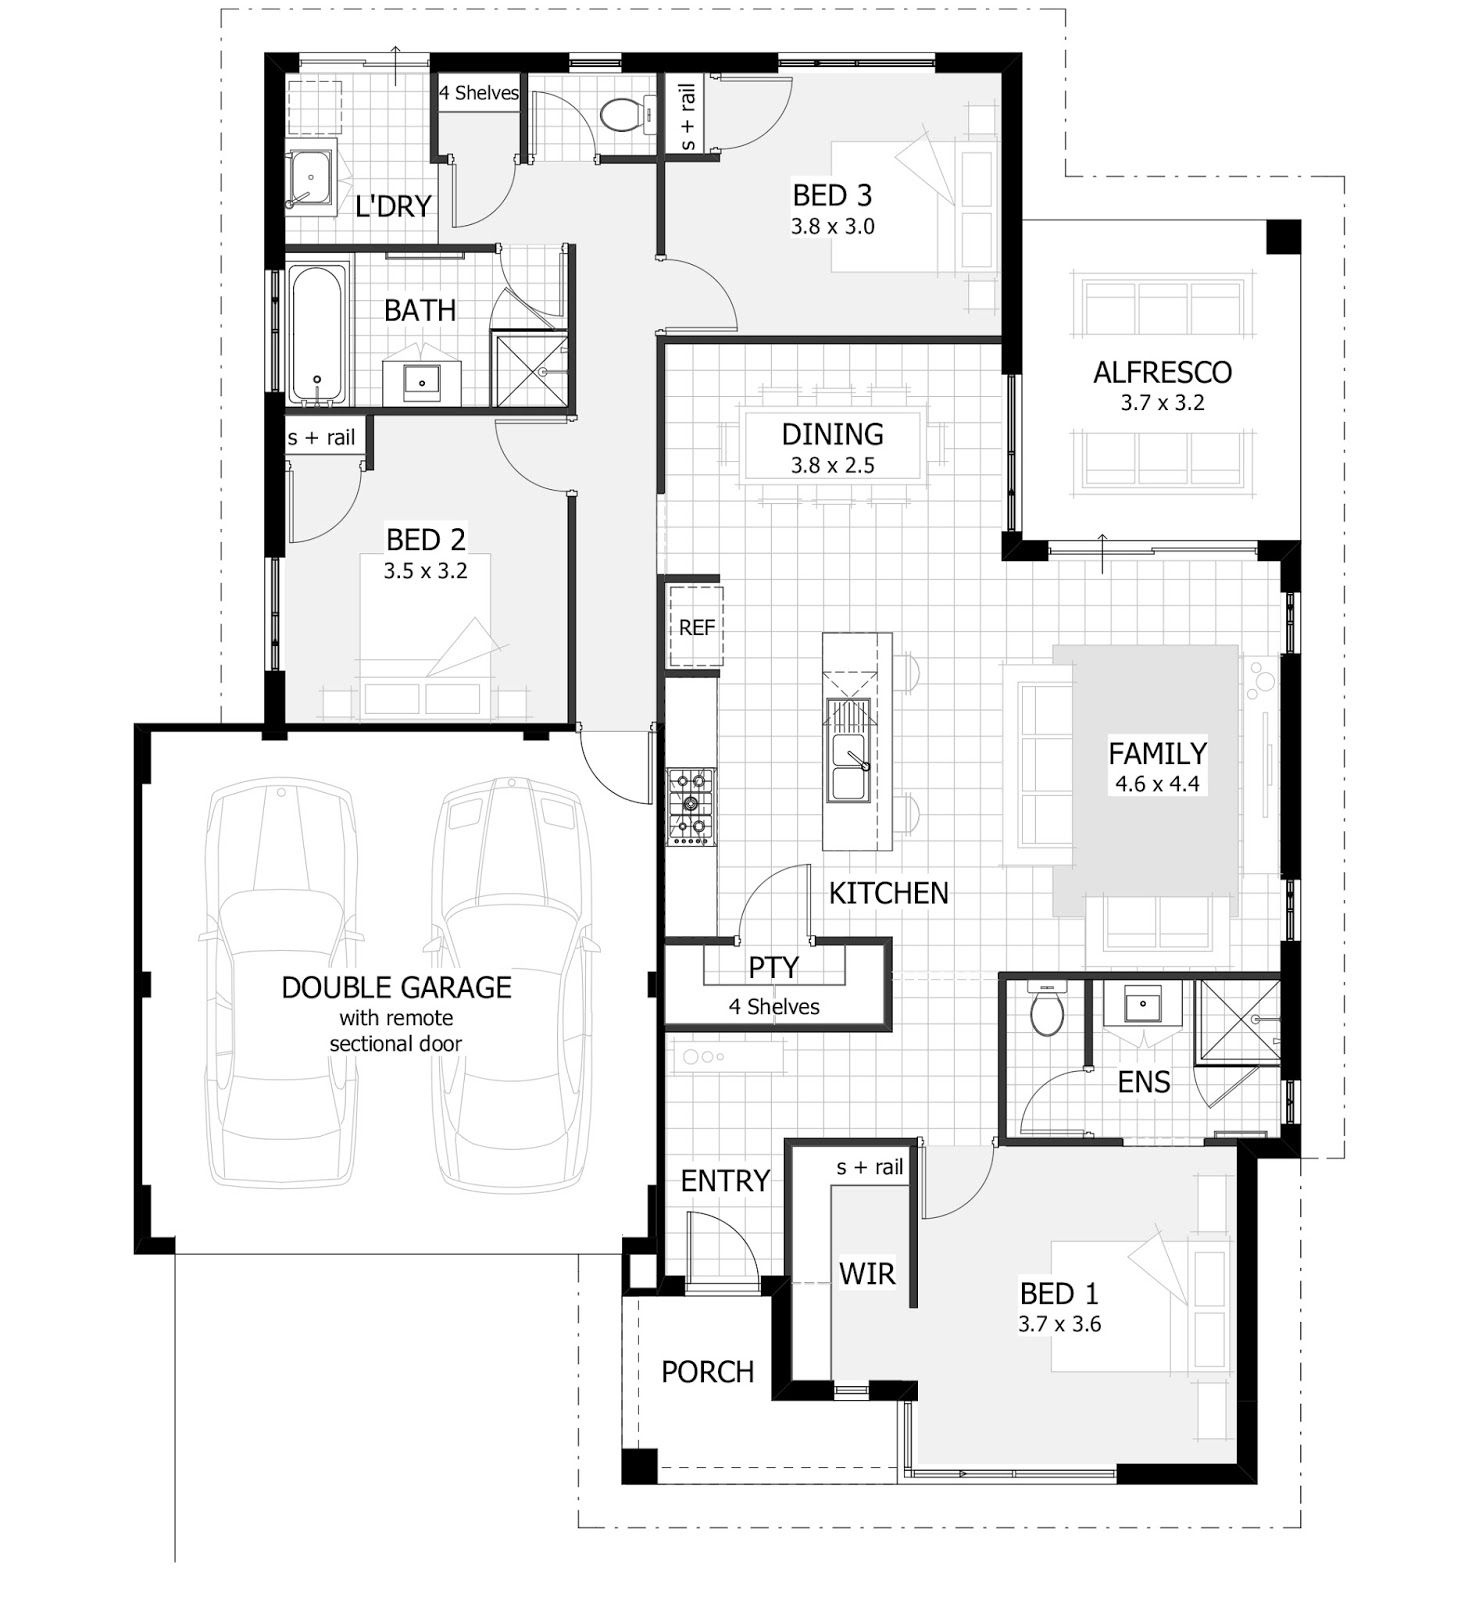 Picture of one story 3 bedrooms and 2 baths ground floor plan in 2020 | bedroom regarding 3 bedroom house plans